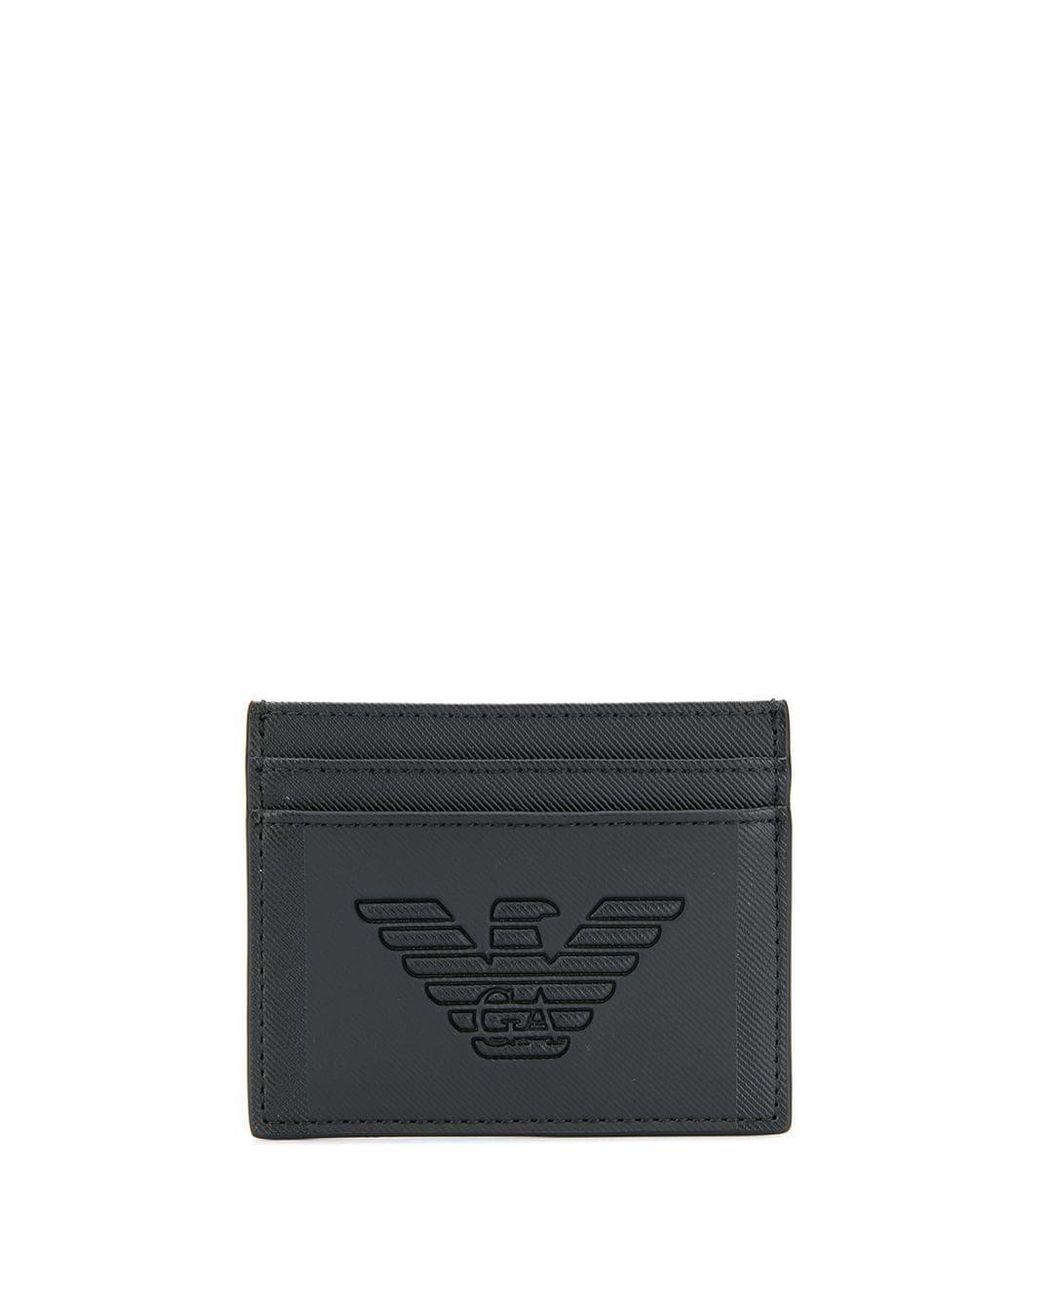 Emporio Armani Logo Credit Card Case Holder in Black for Men - Save 4% ...